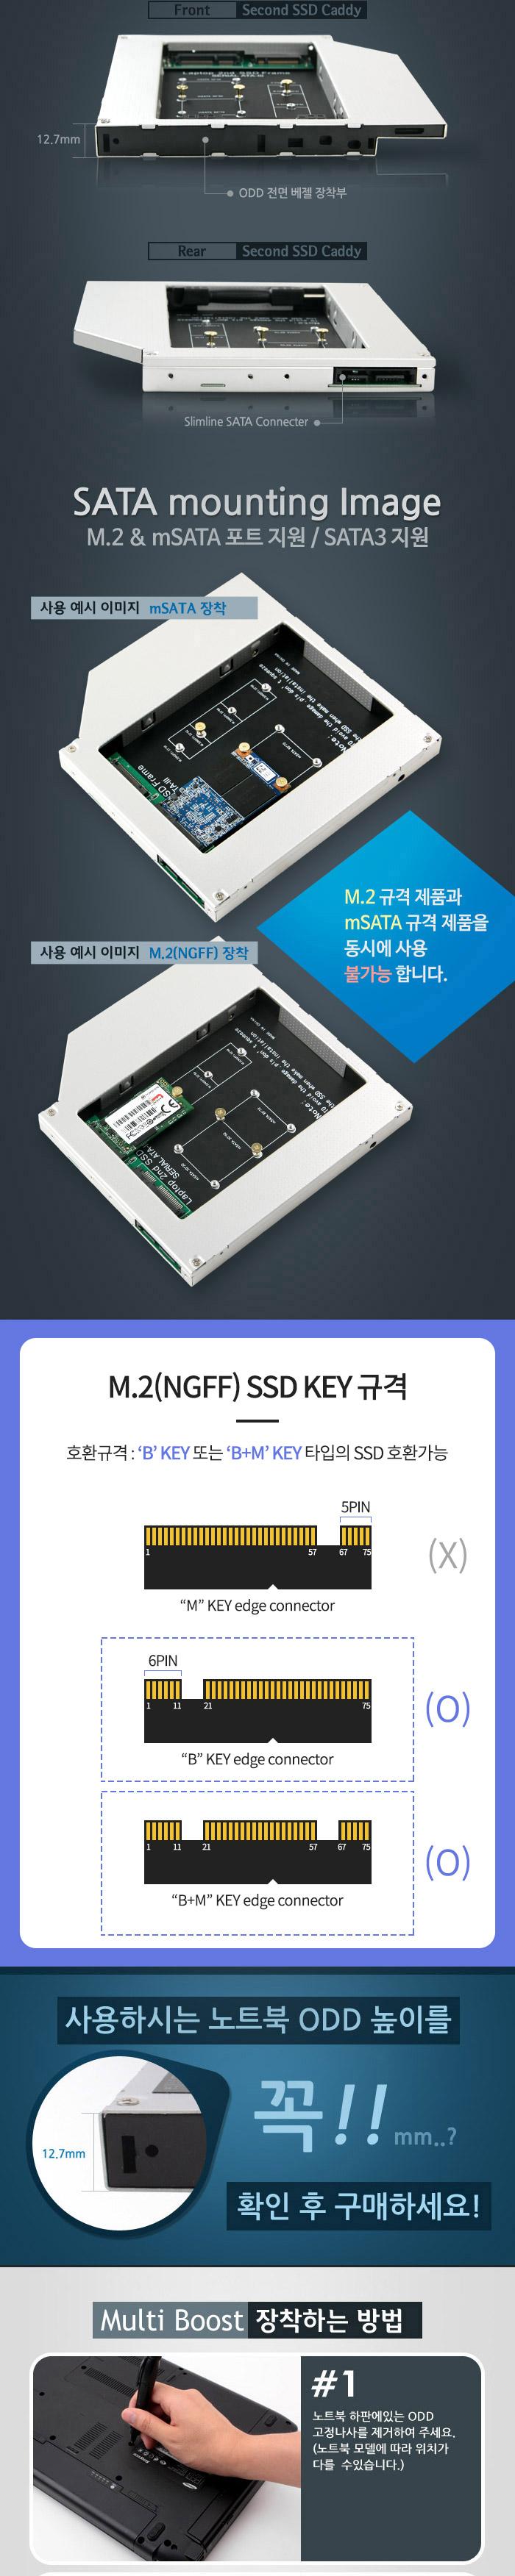 Coms ƮϿ ƼνƮ 12.5mm M.2 NGFF SSD KEY B+M + mSATA to Slimline SATA F SATA3  ƼνƮ Ʈϵ߰ ϵ߰ ƮϸƼνƮ MSATA߰ ODDü MULTIBOOST Ʈϵ忬 ƮϺνƮ ƮϿƼƮ